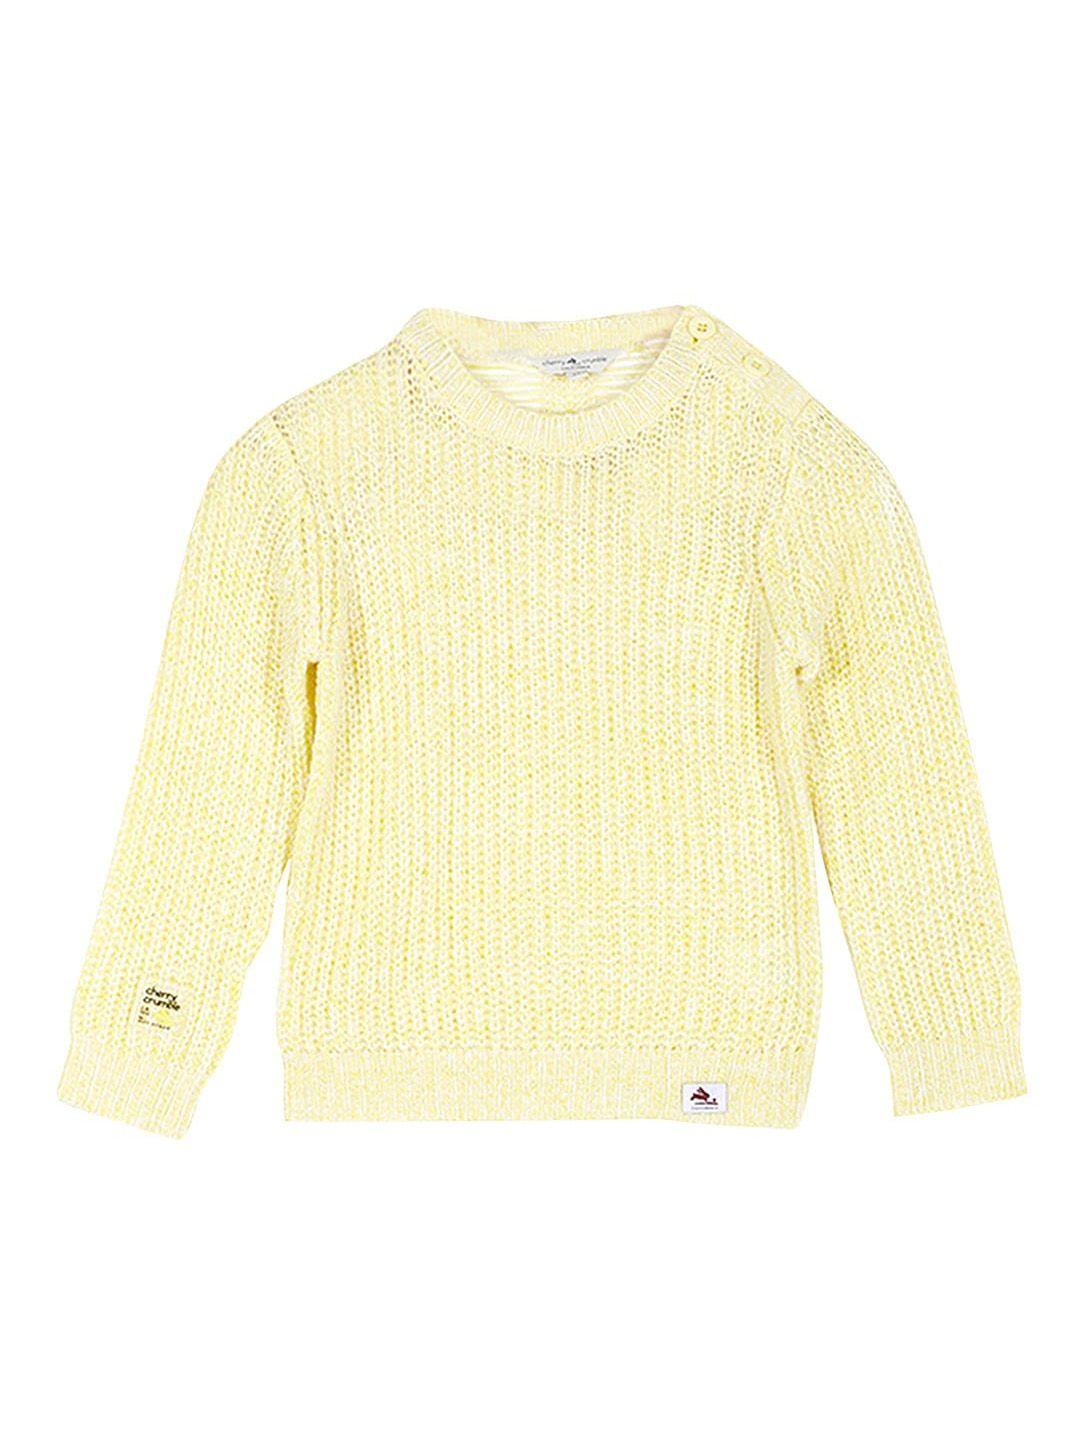 cherry crumble unisex kids yellow self design pullover sweater